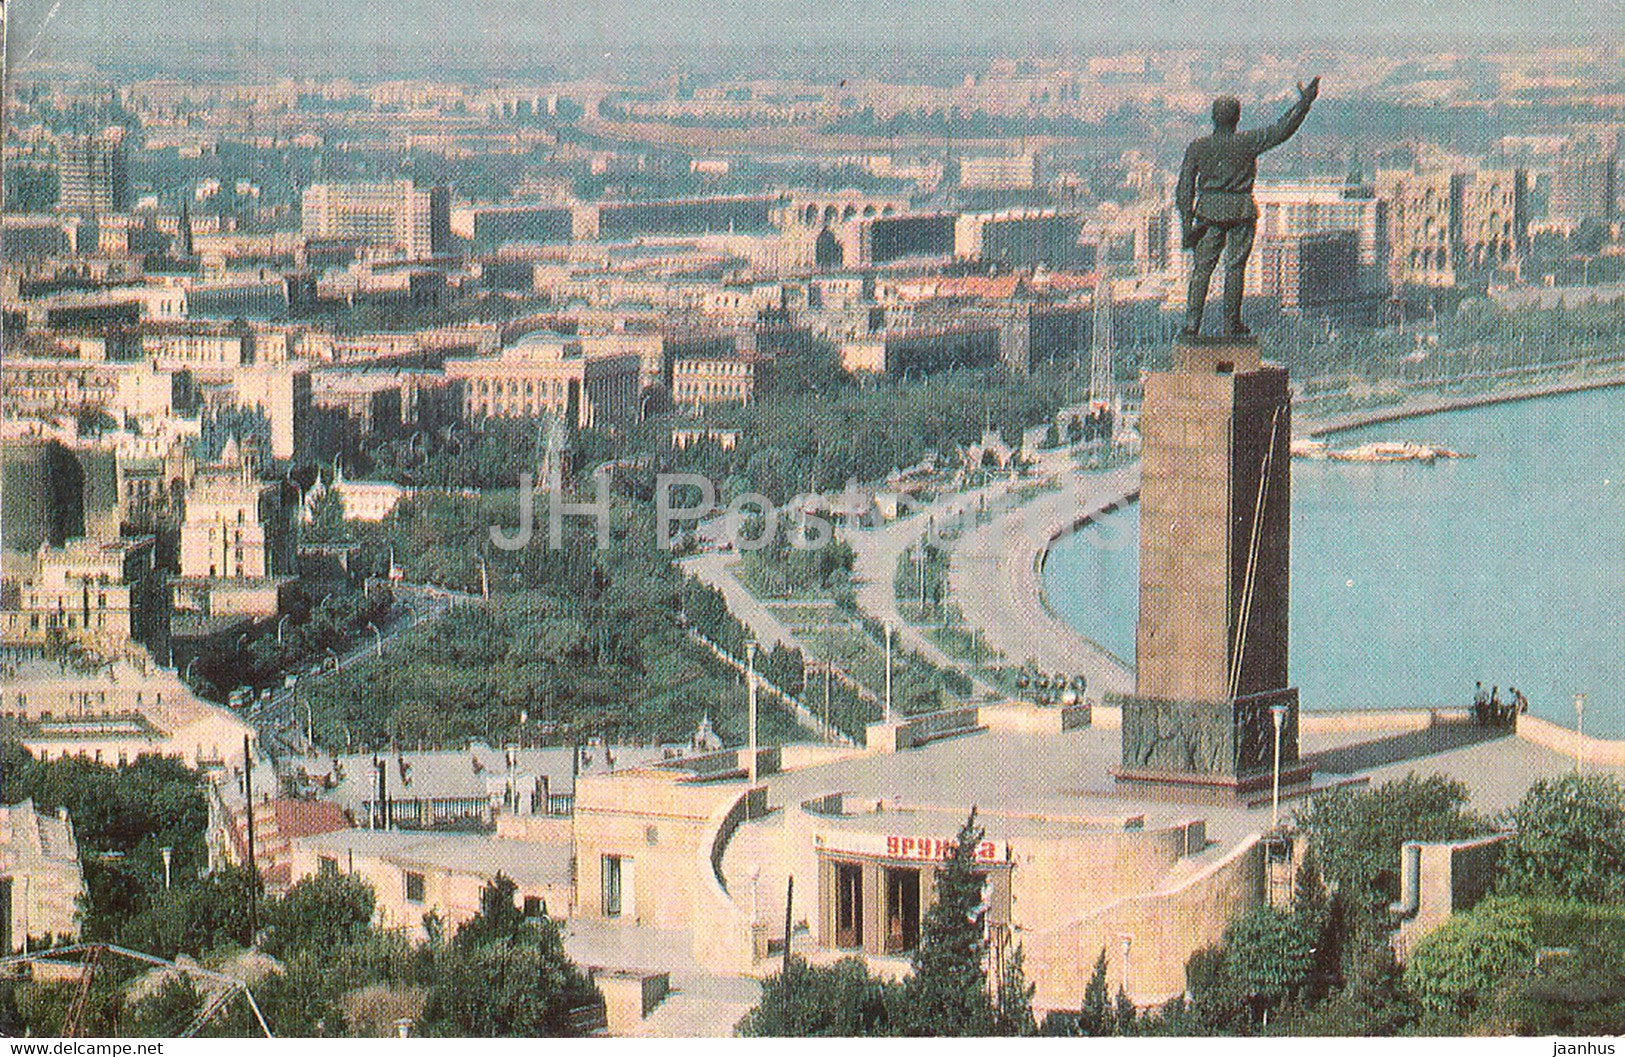 Baku - Central Part of the City - 1974 - Azerbaijan USSR - unused - JH Postcards